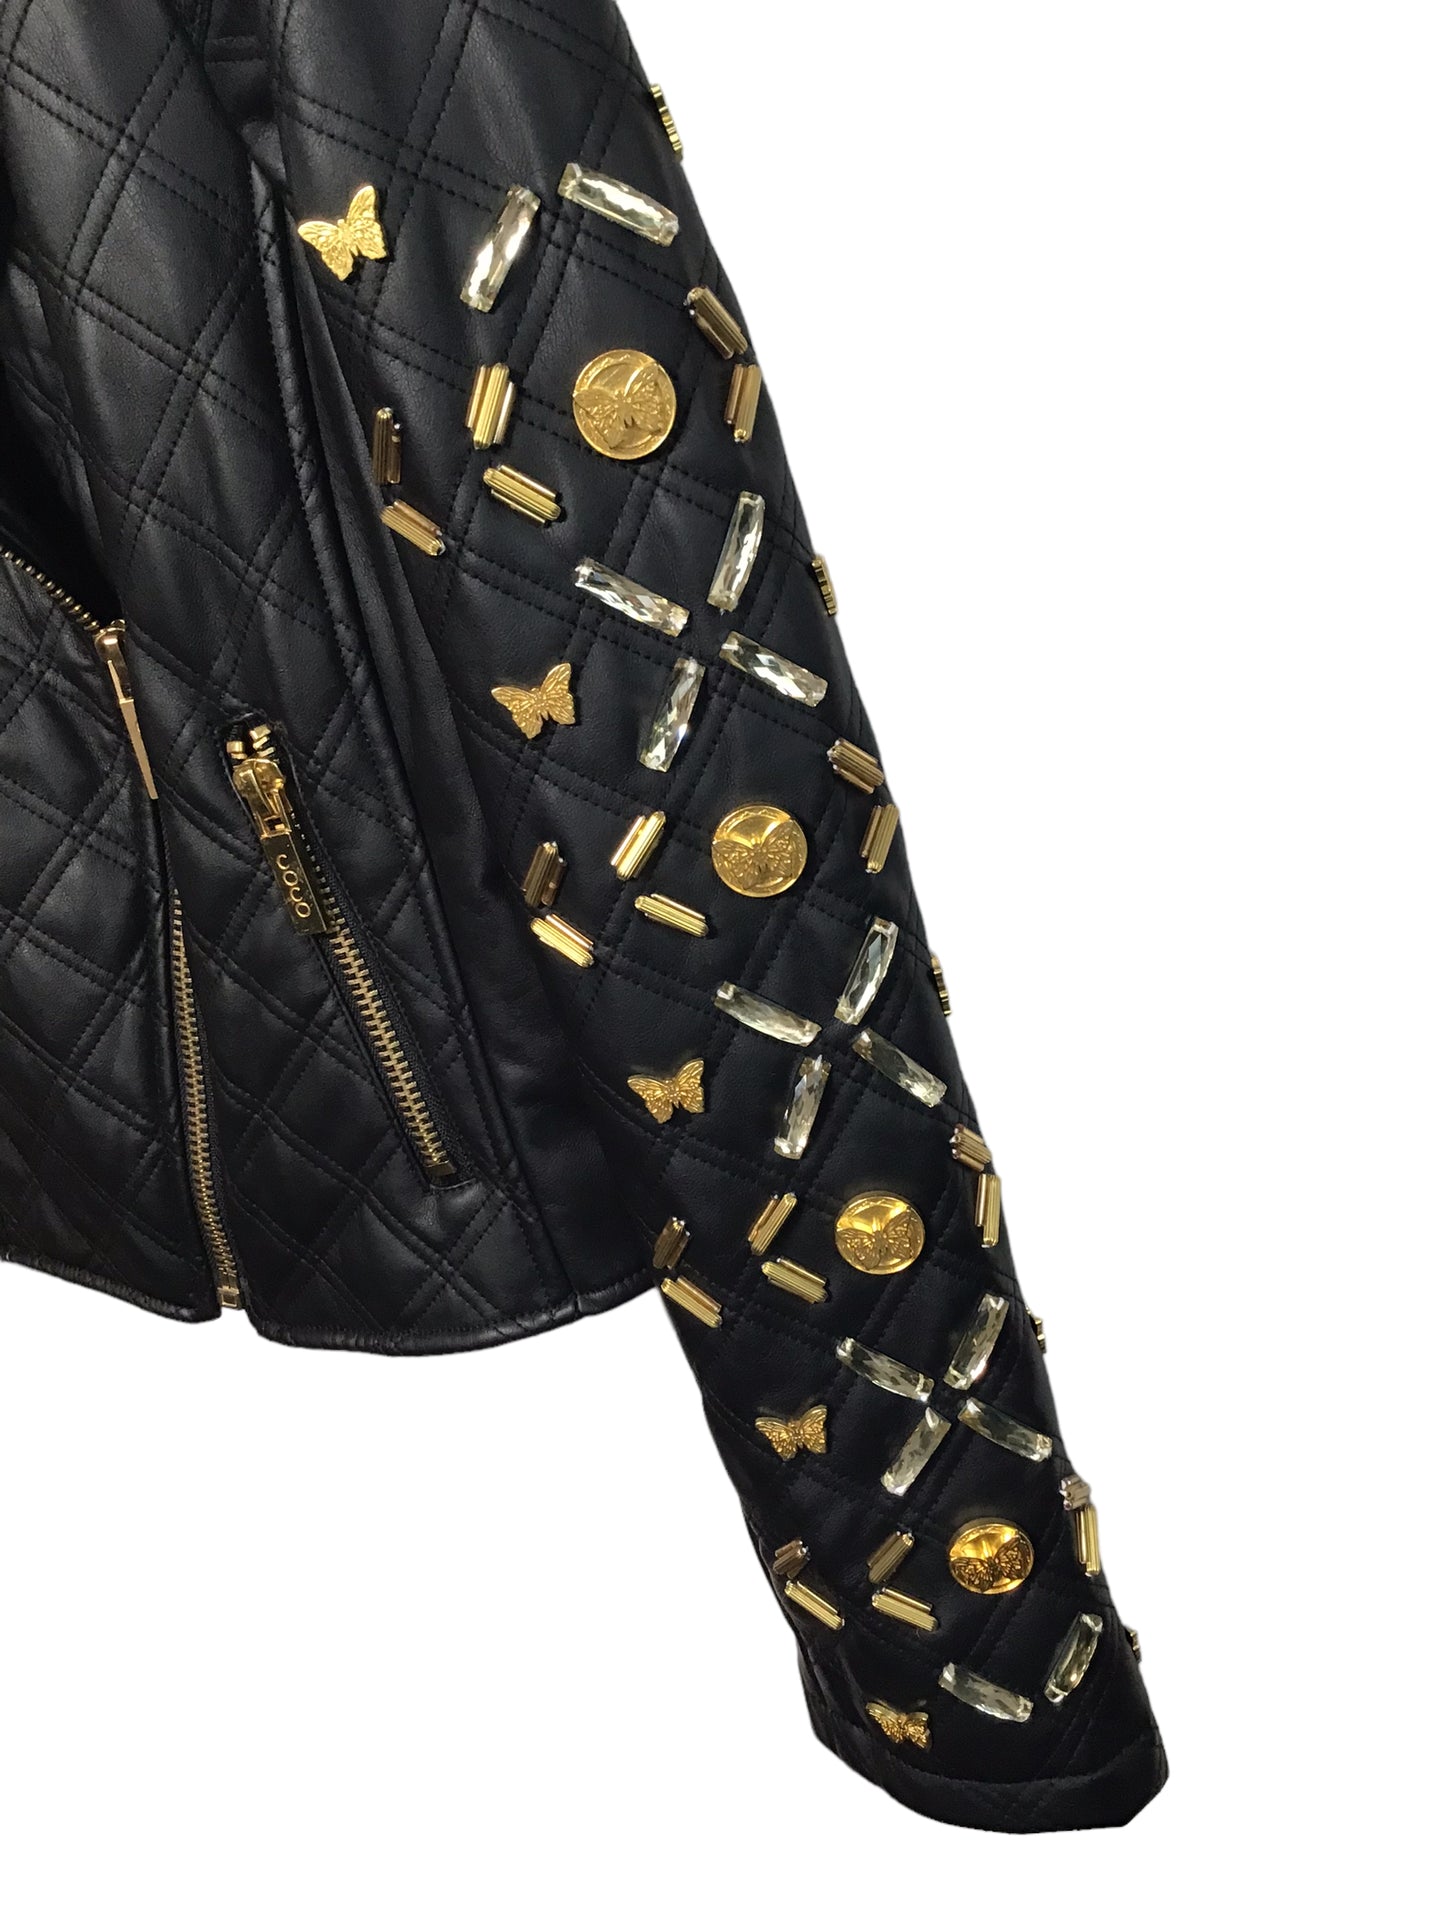 Disney by Coco Rocha Embellished Leather Jacket (Women's Size L)